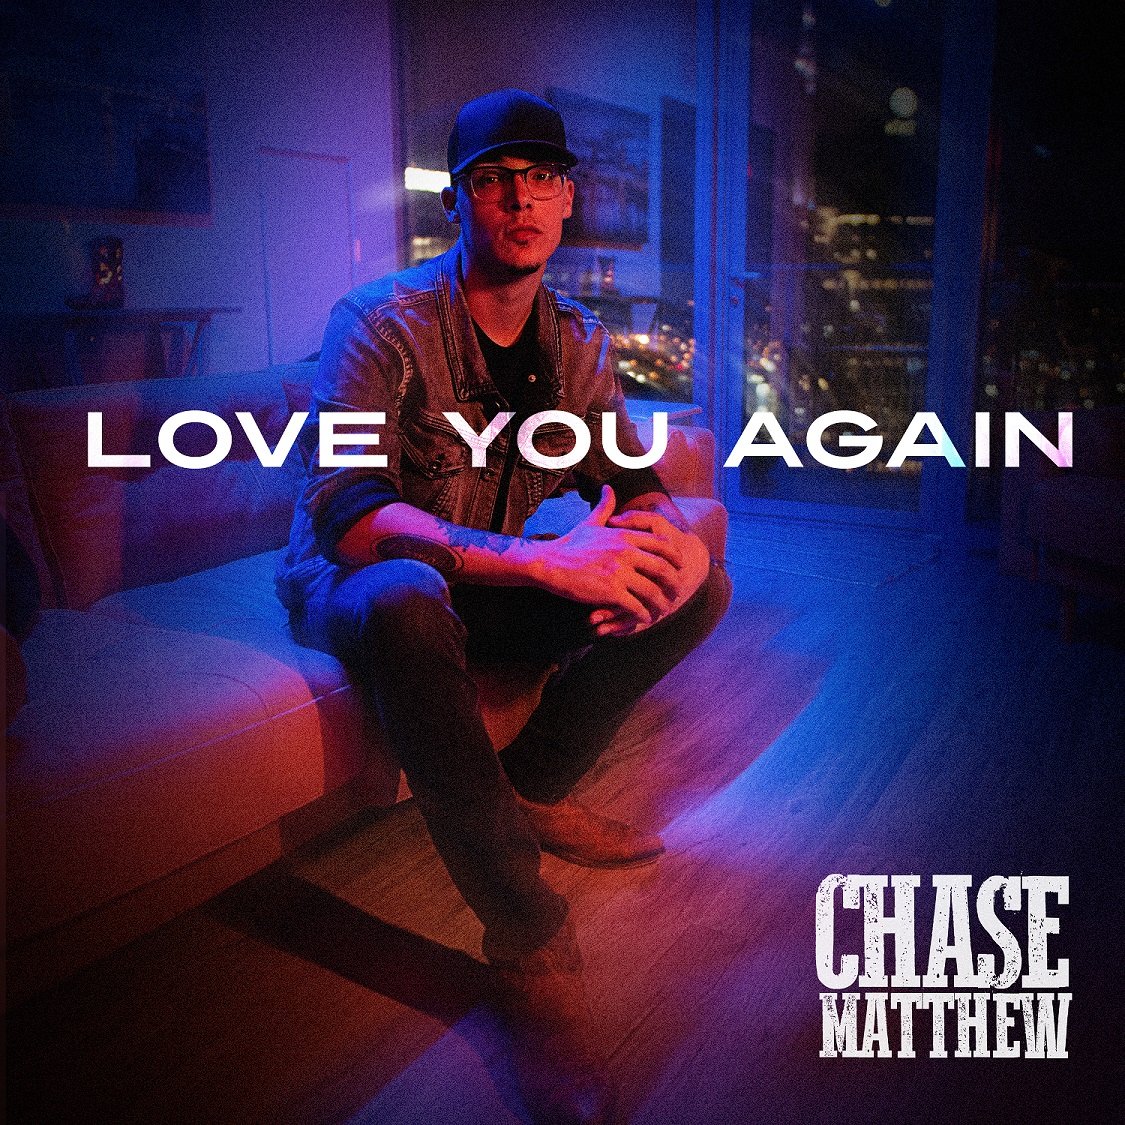 Chase Matthew albums songs playlists  Listen on Deezer